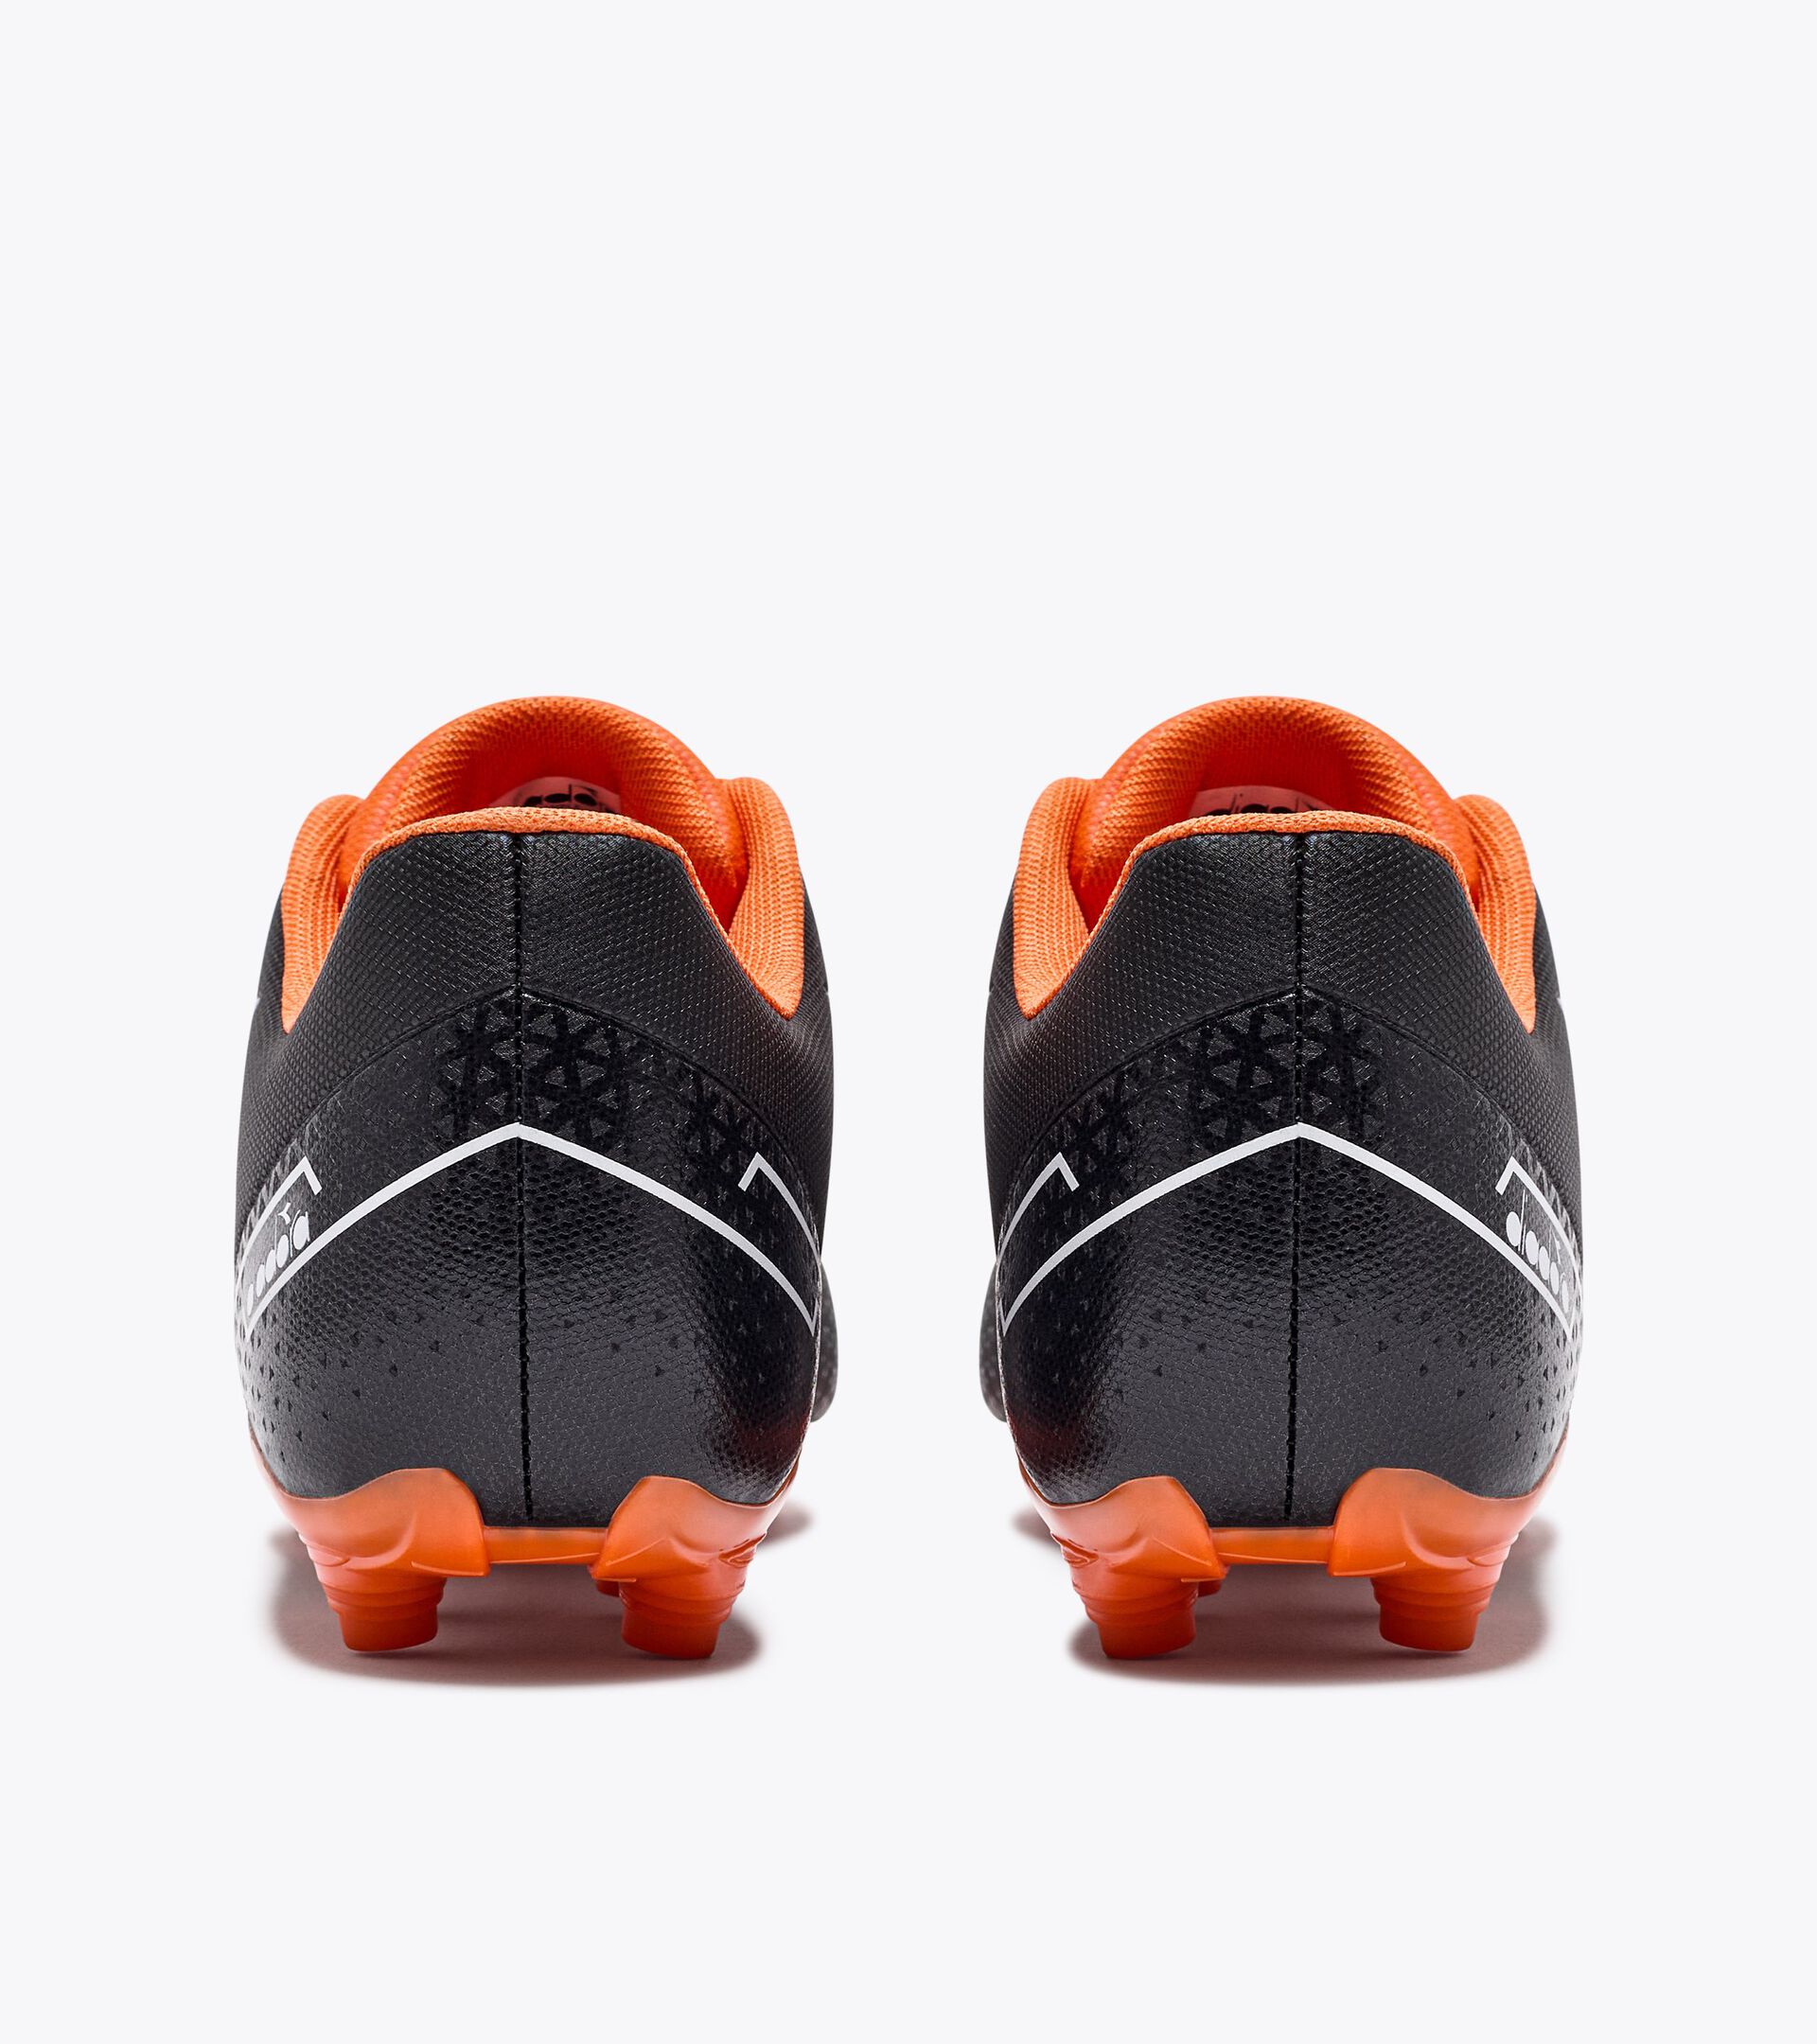 Calcio boots for firm grounds - Men PICHICHI 6 MG14 BLACK/WHITE/ORANGE - Diadora